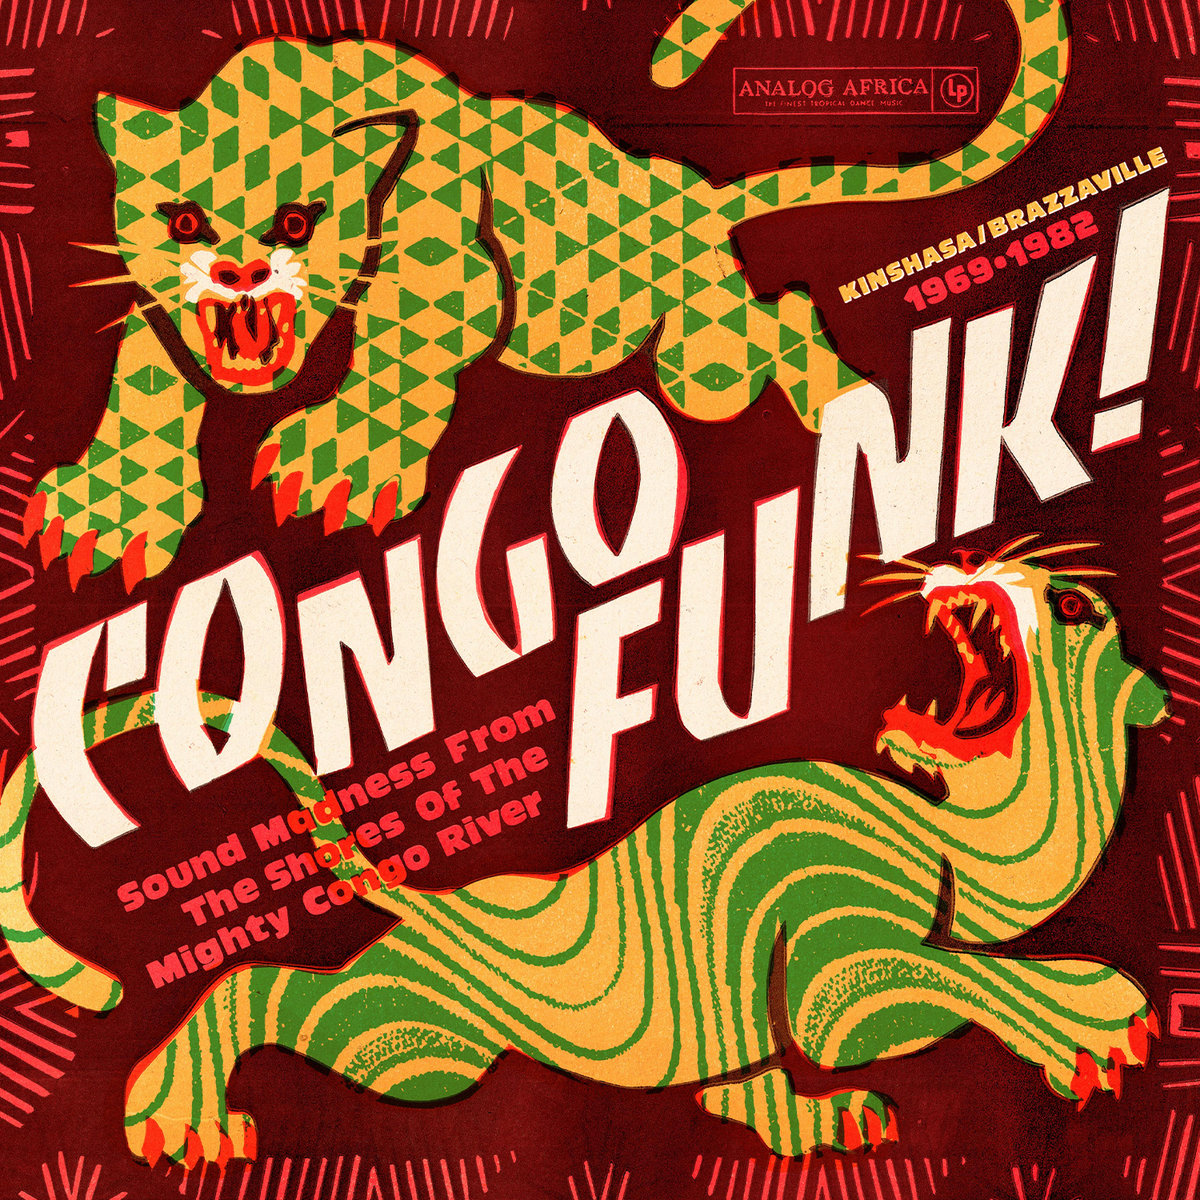 Various – Congo Funk! Sound Madness From The Shores Of The Mighty Congo River (Kinshasa/Brazzaville 1969-1982) Music Album Compilation 🇨🇩

Enjoy : videos.files.wordpress.com/Tt3aAQ2K/congo…

* * * * *

#sunnyboy66 #congo #congomusic #congolese #congolesemusic #rumba #rumbamusic #afrobeat #afrobeat